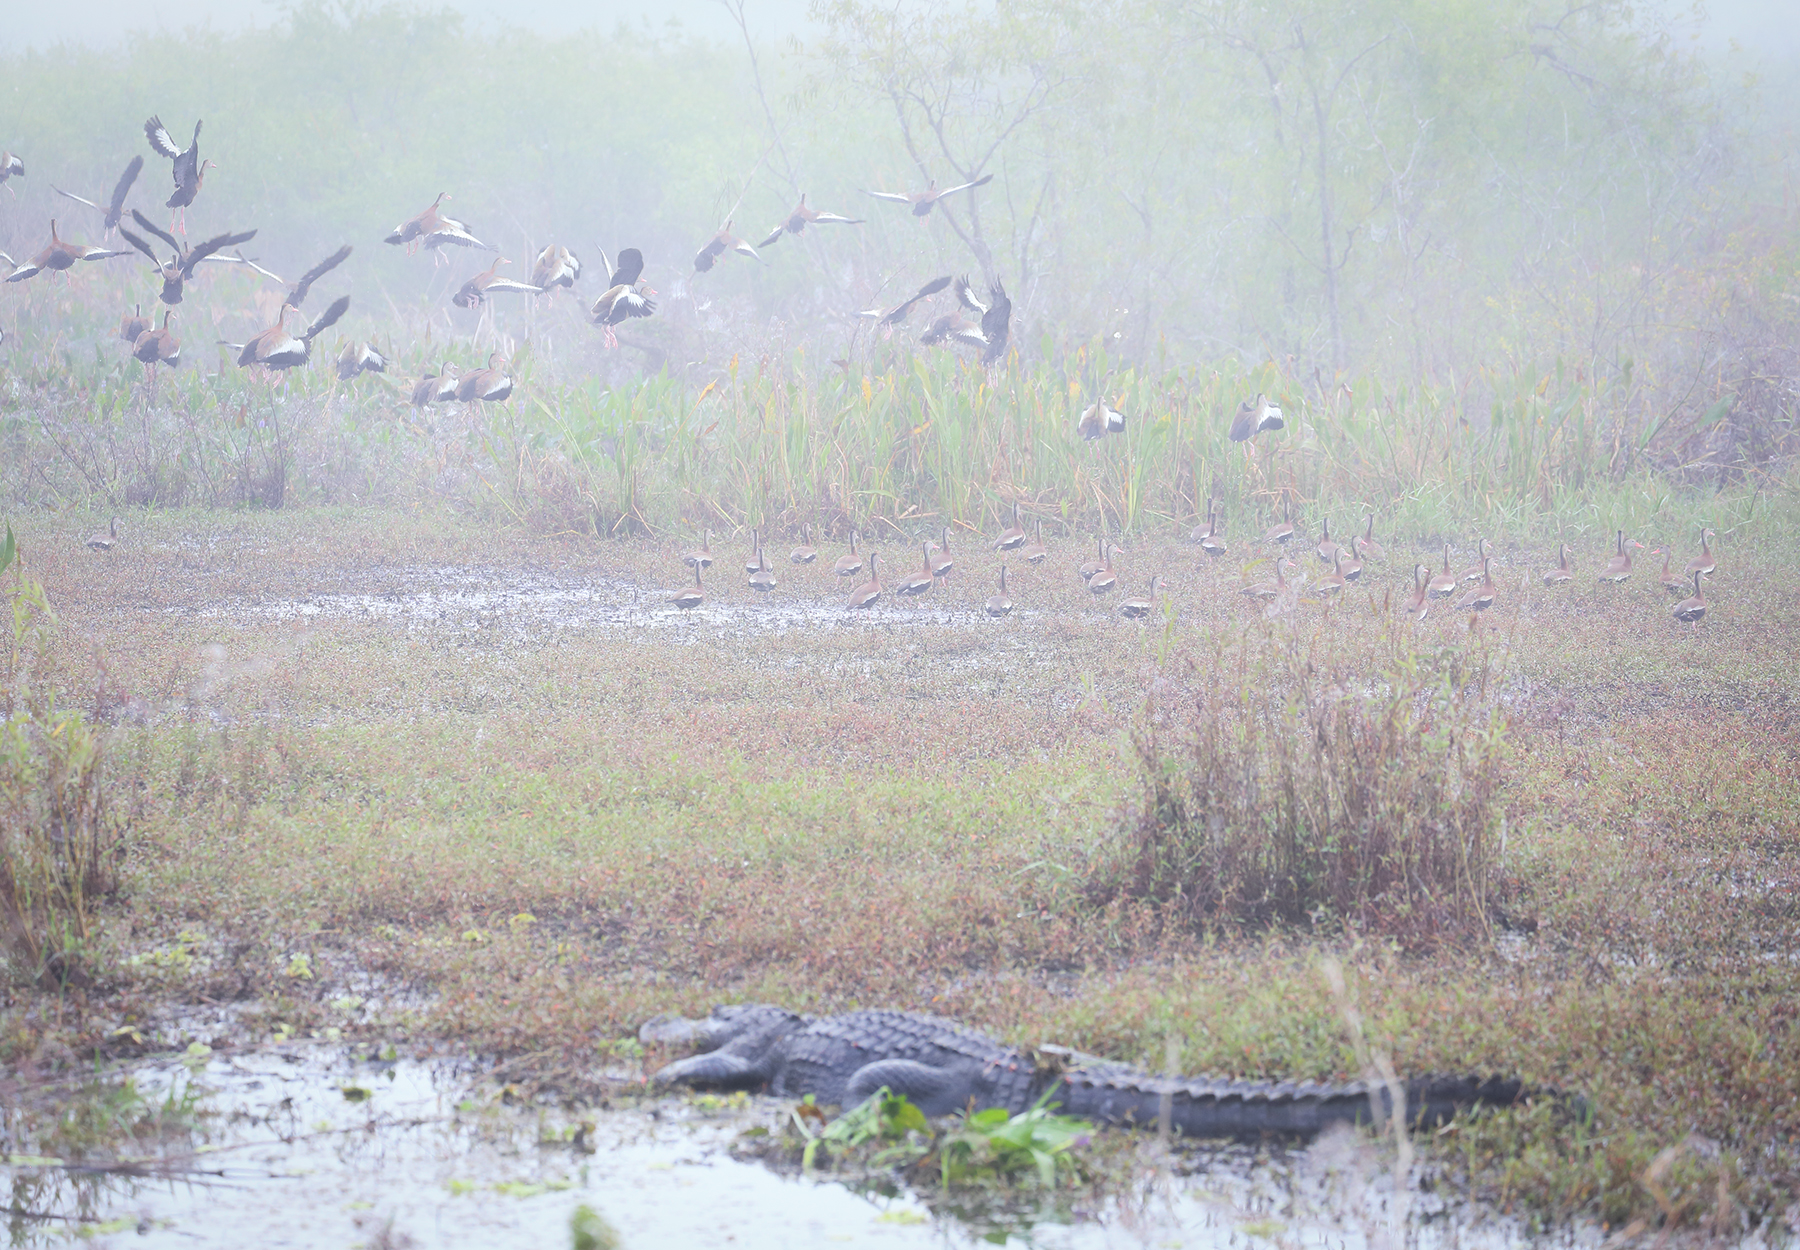 Ducks and an alligator on a foggy morning. 